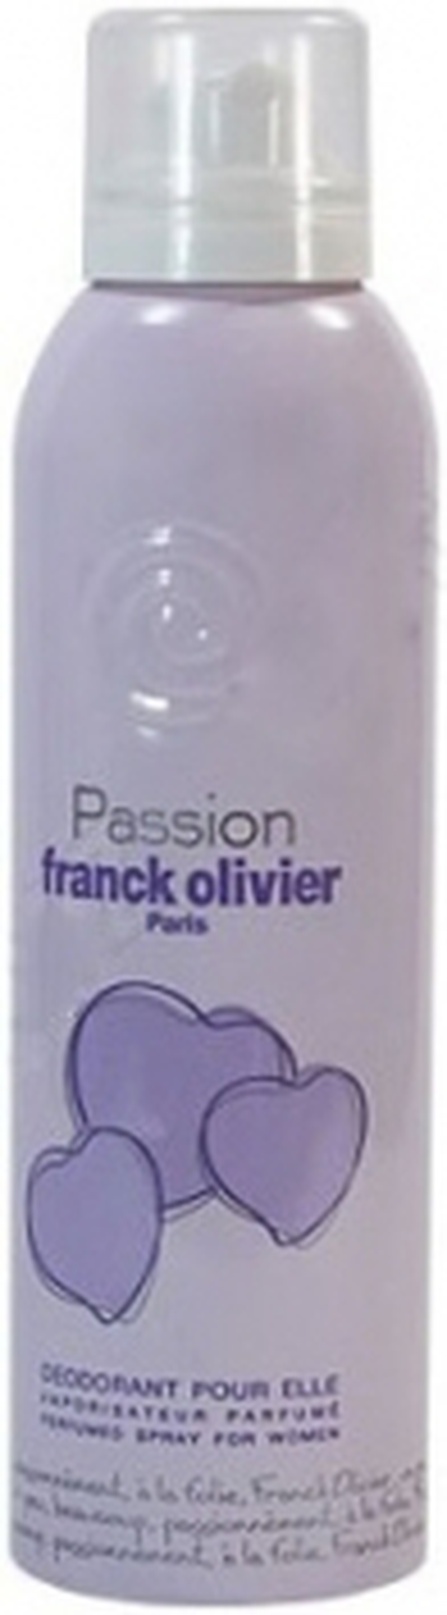 Franck olivier passion. Антиперспирант nature Franck Olivier. Franck Olivier дезодорант. Franck Olivier woman passion. Franck Olivier Deodorant for women.